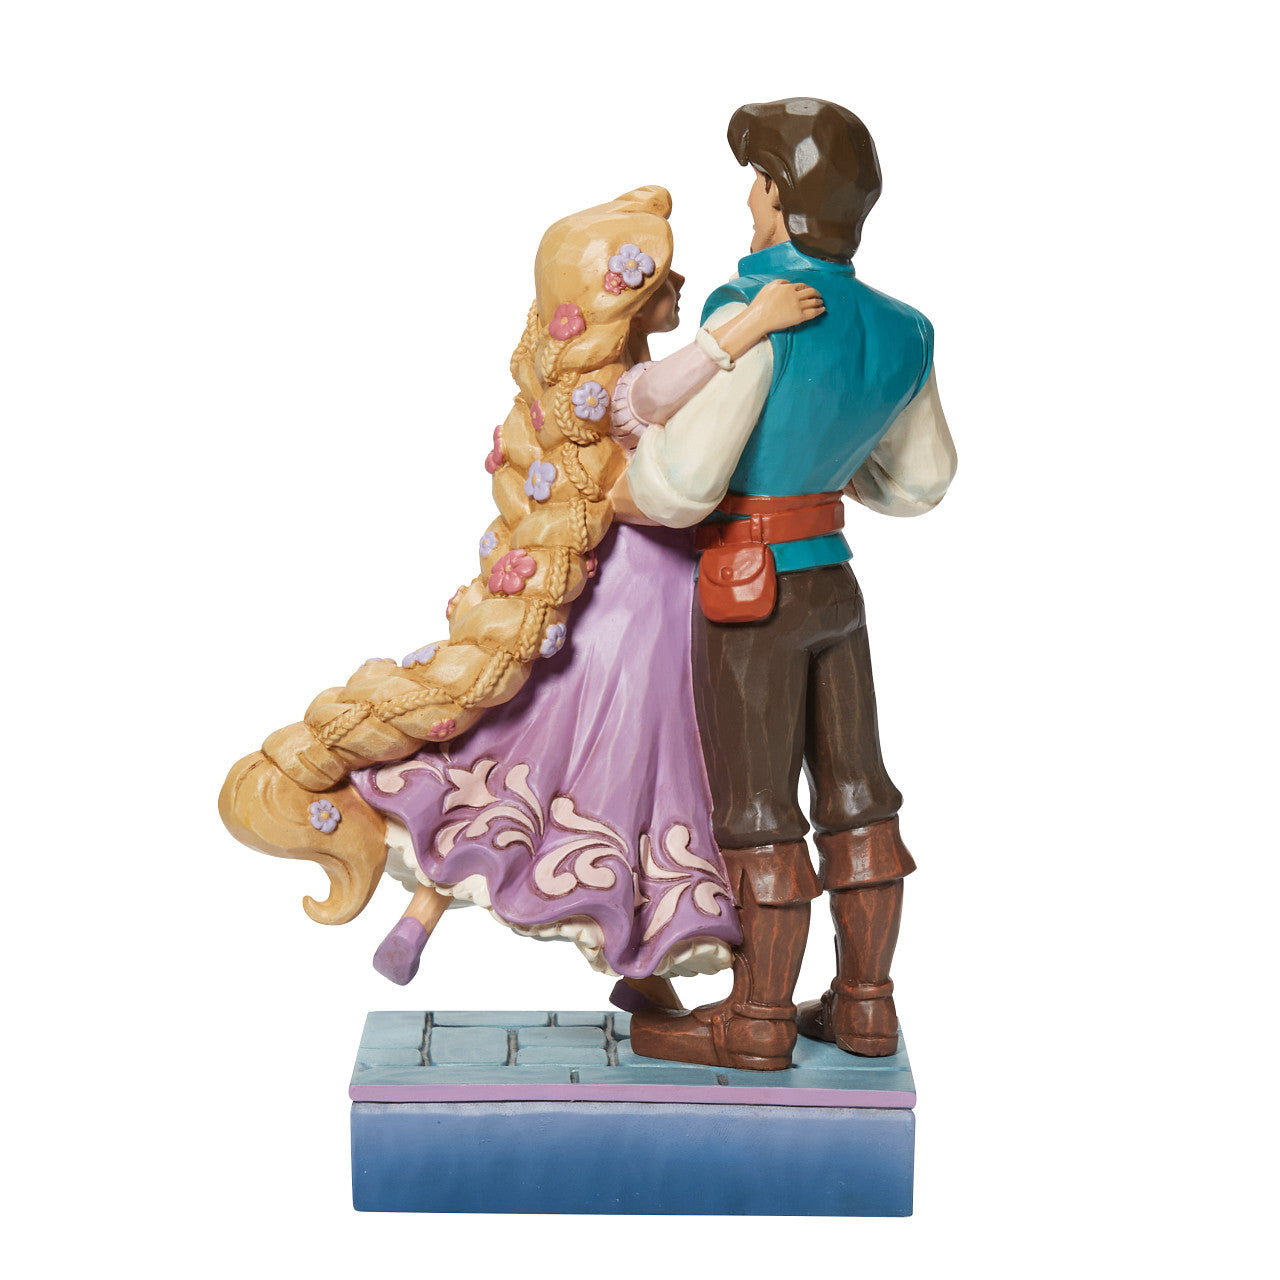 My New Dream - Rapunzel and Flynn Rider Love